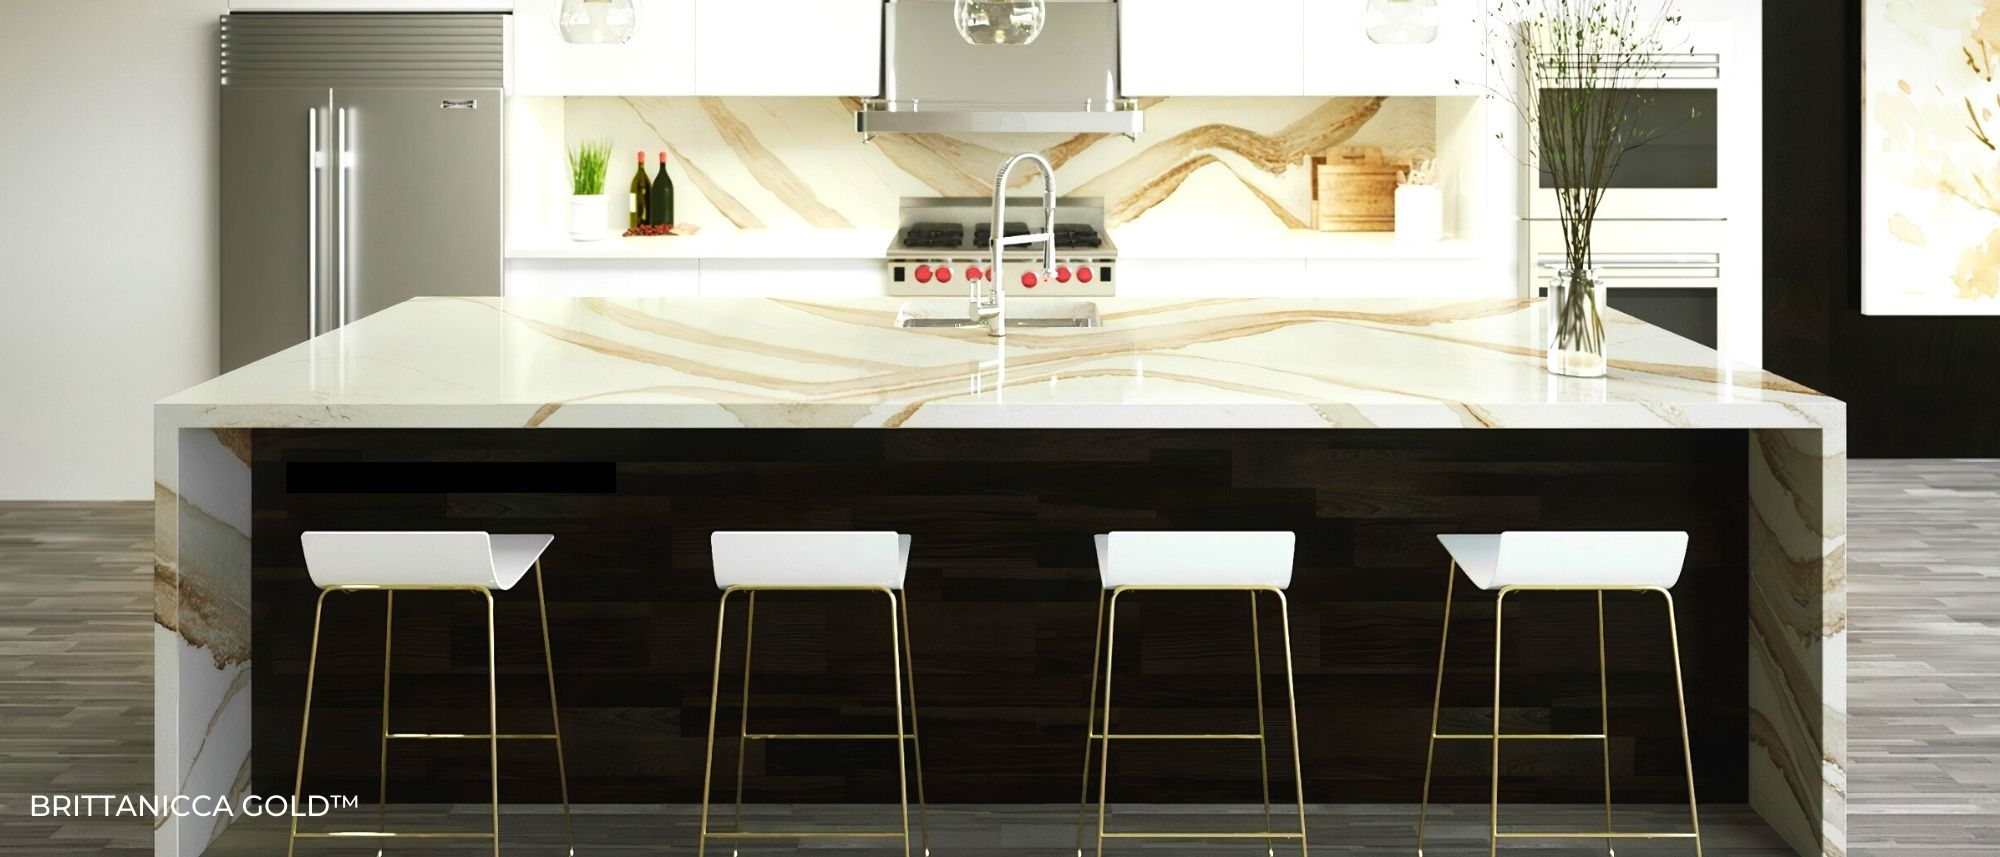 BRITTANICCA GOLD™ Design Spotlight Installed Kitchen Countertops Bathroom Countertops Shower Walls Header Cambria Brittanicca Gold Countertops Brittanicca Gold Quartz Cambria Brittanicca Gold